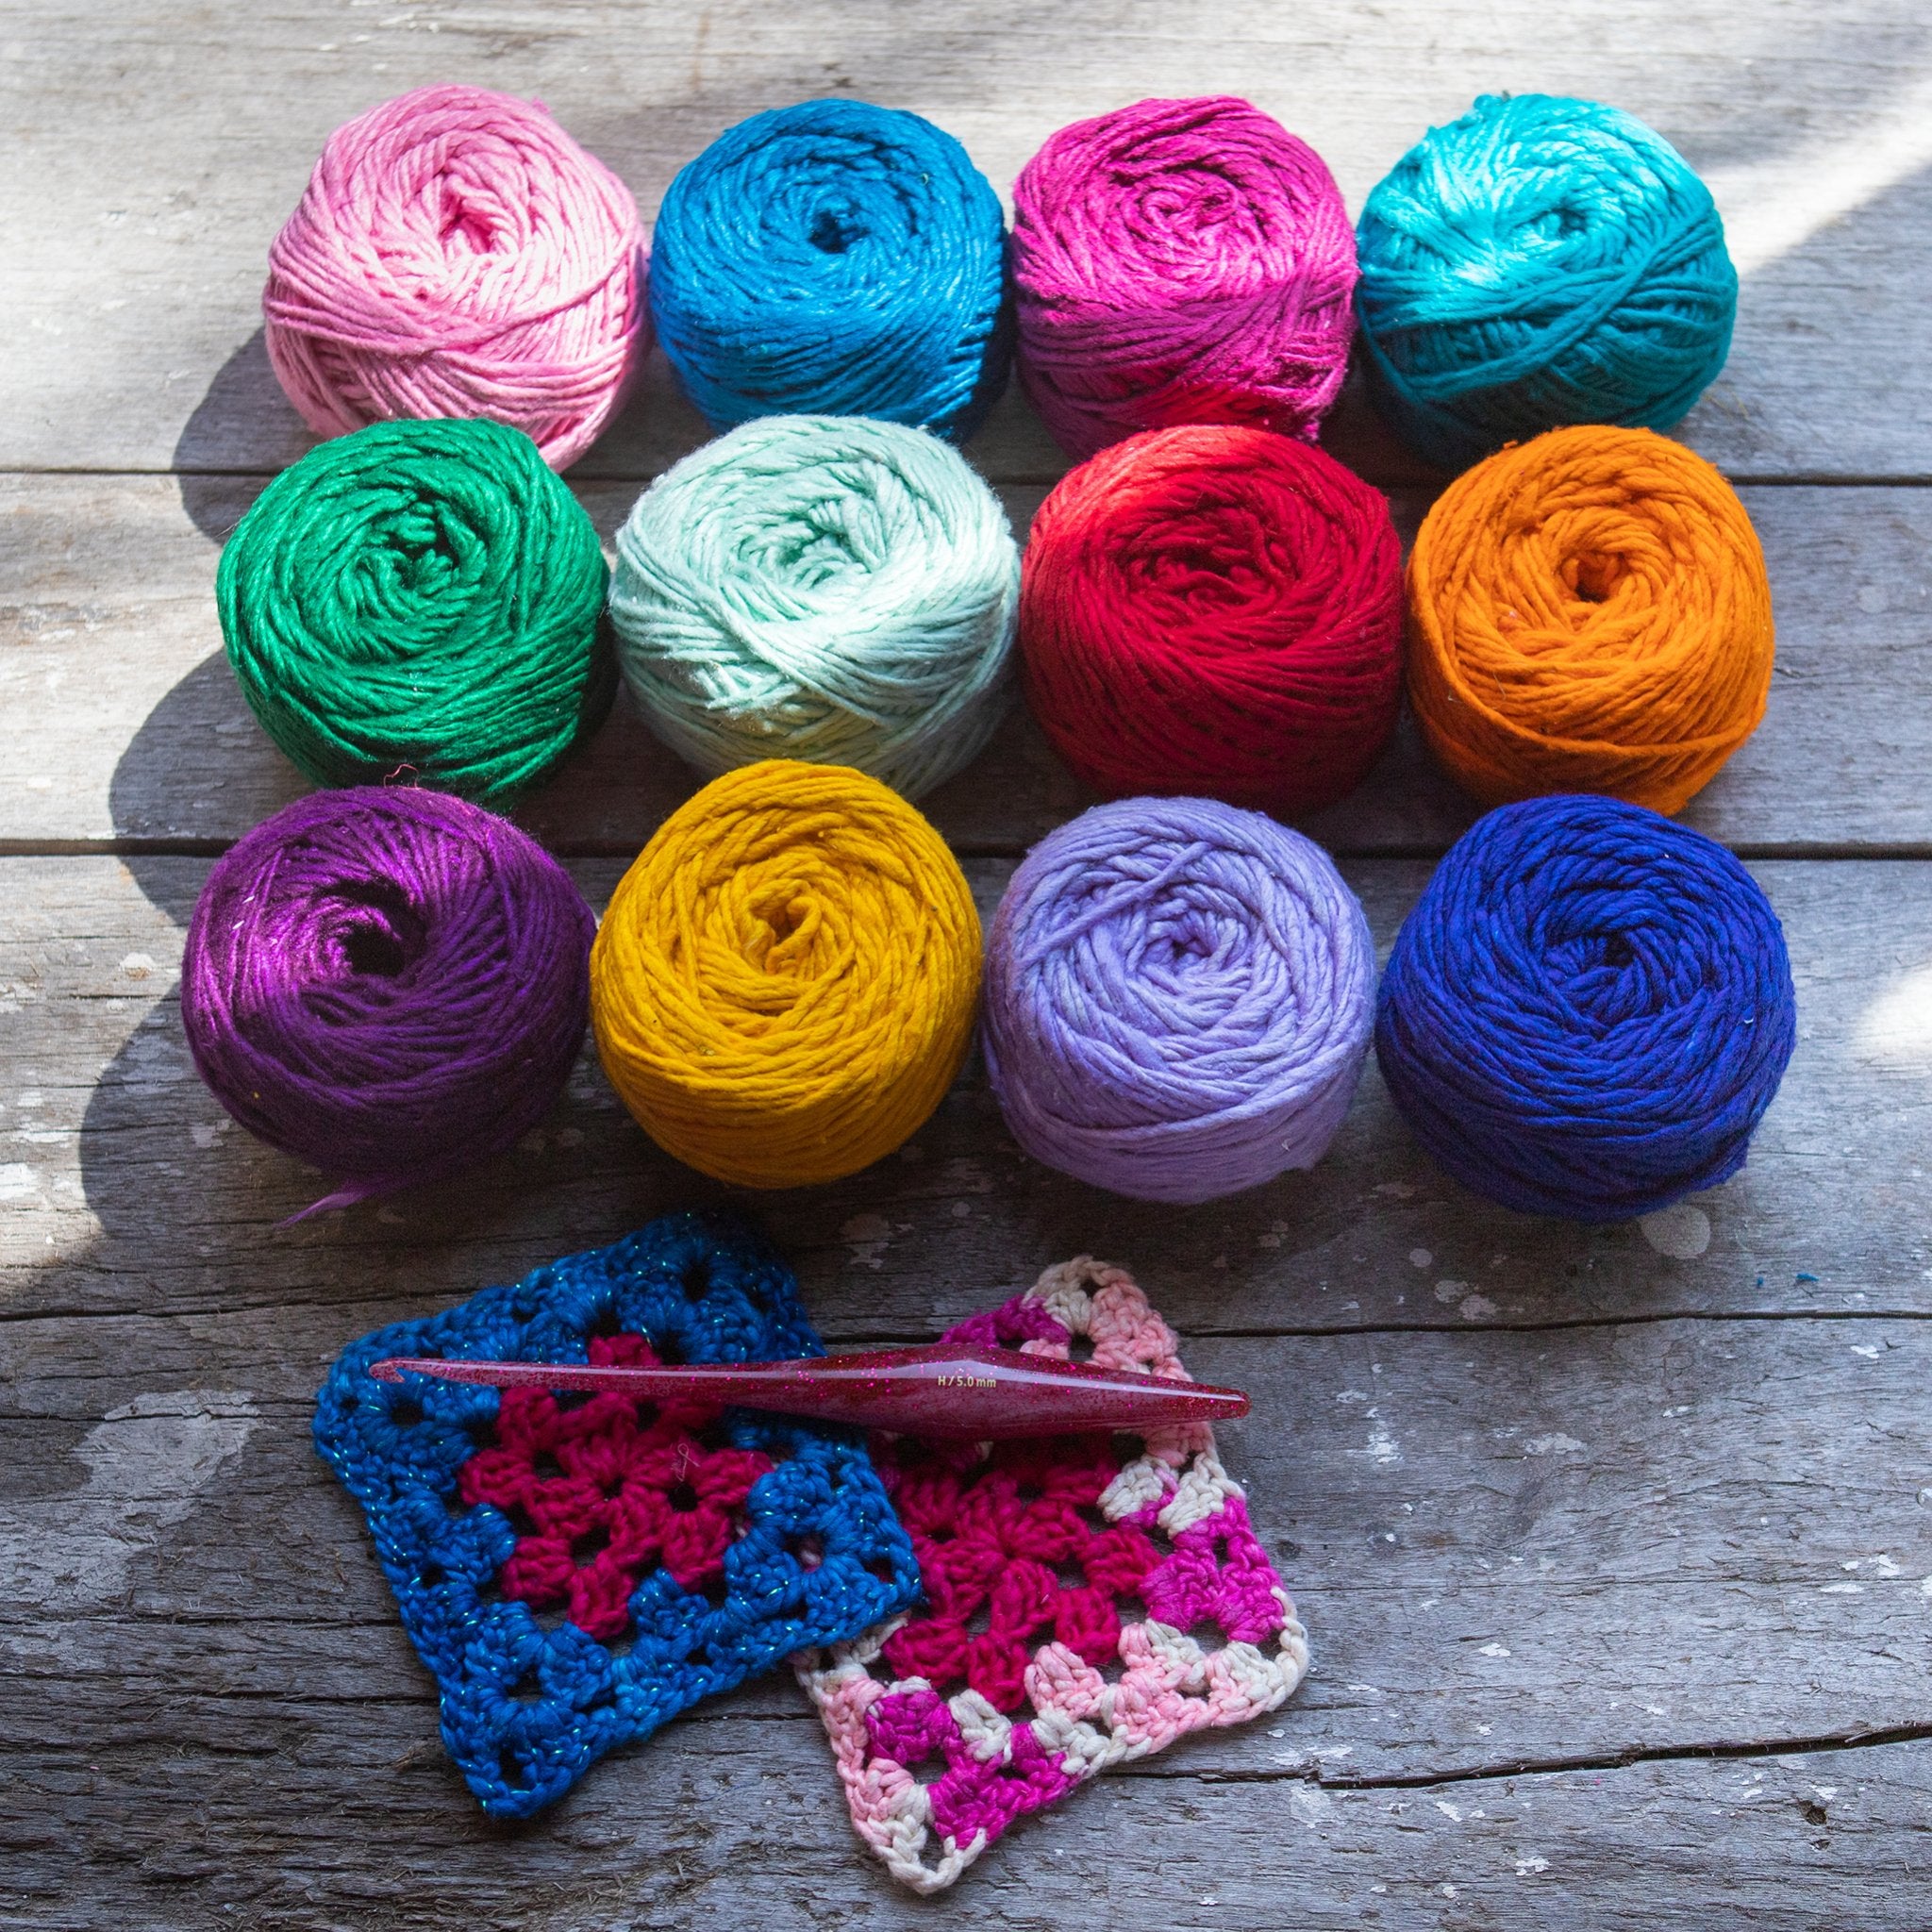 10 Tips for Making Crochet Granny Squares - Darn Good Yarn